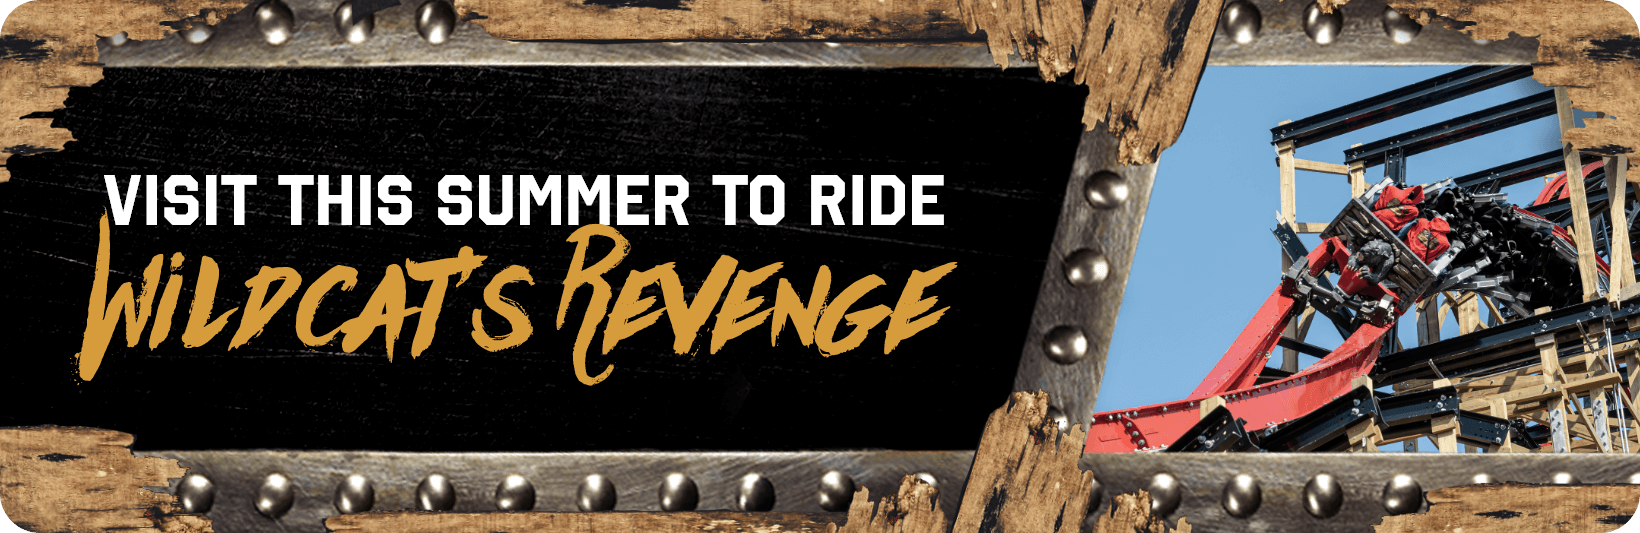 Visit This Summer To Ride Wildcat’s Revenge roller coaster at Hersheypark